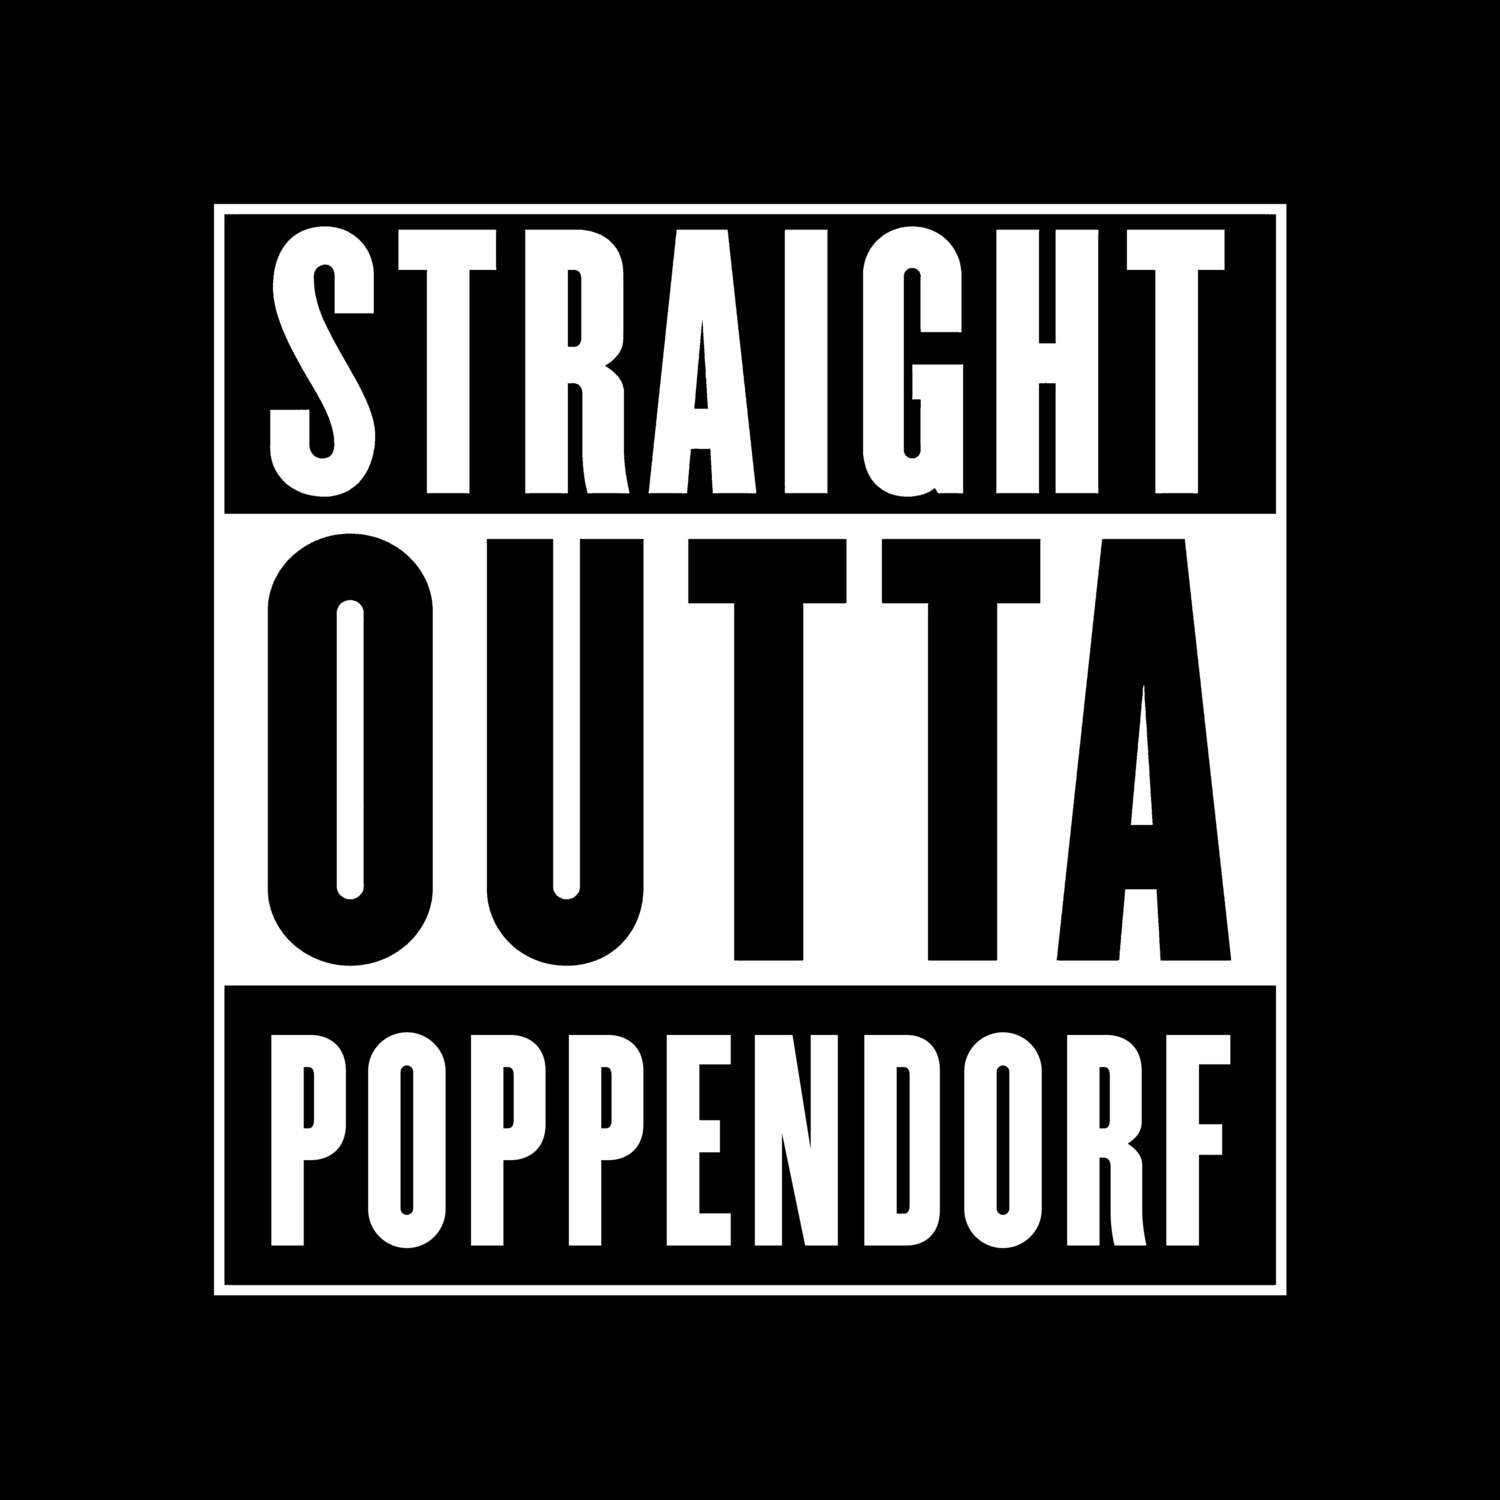 Poppendorf T-Shirt »Straight Outta«